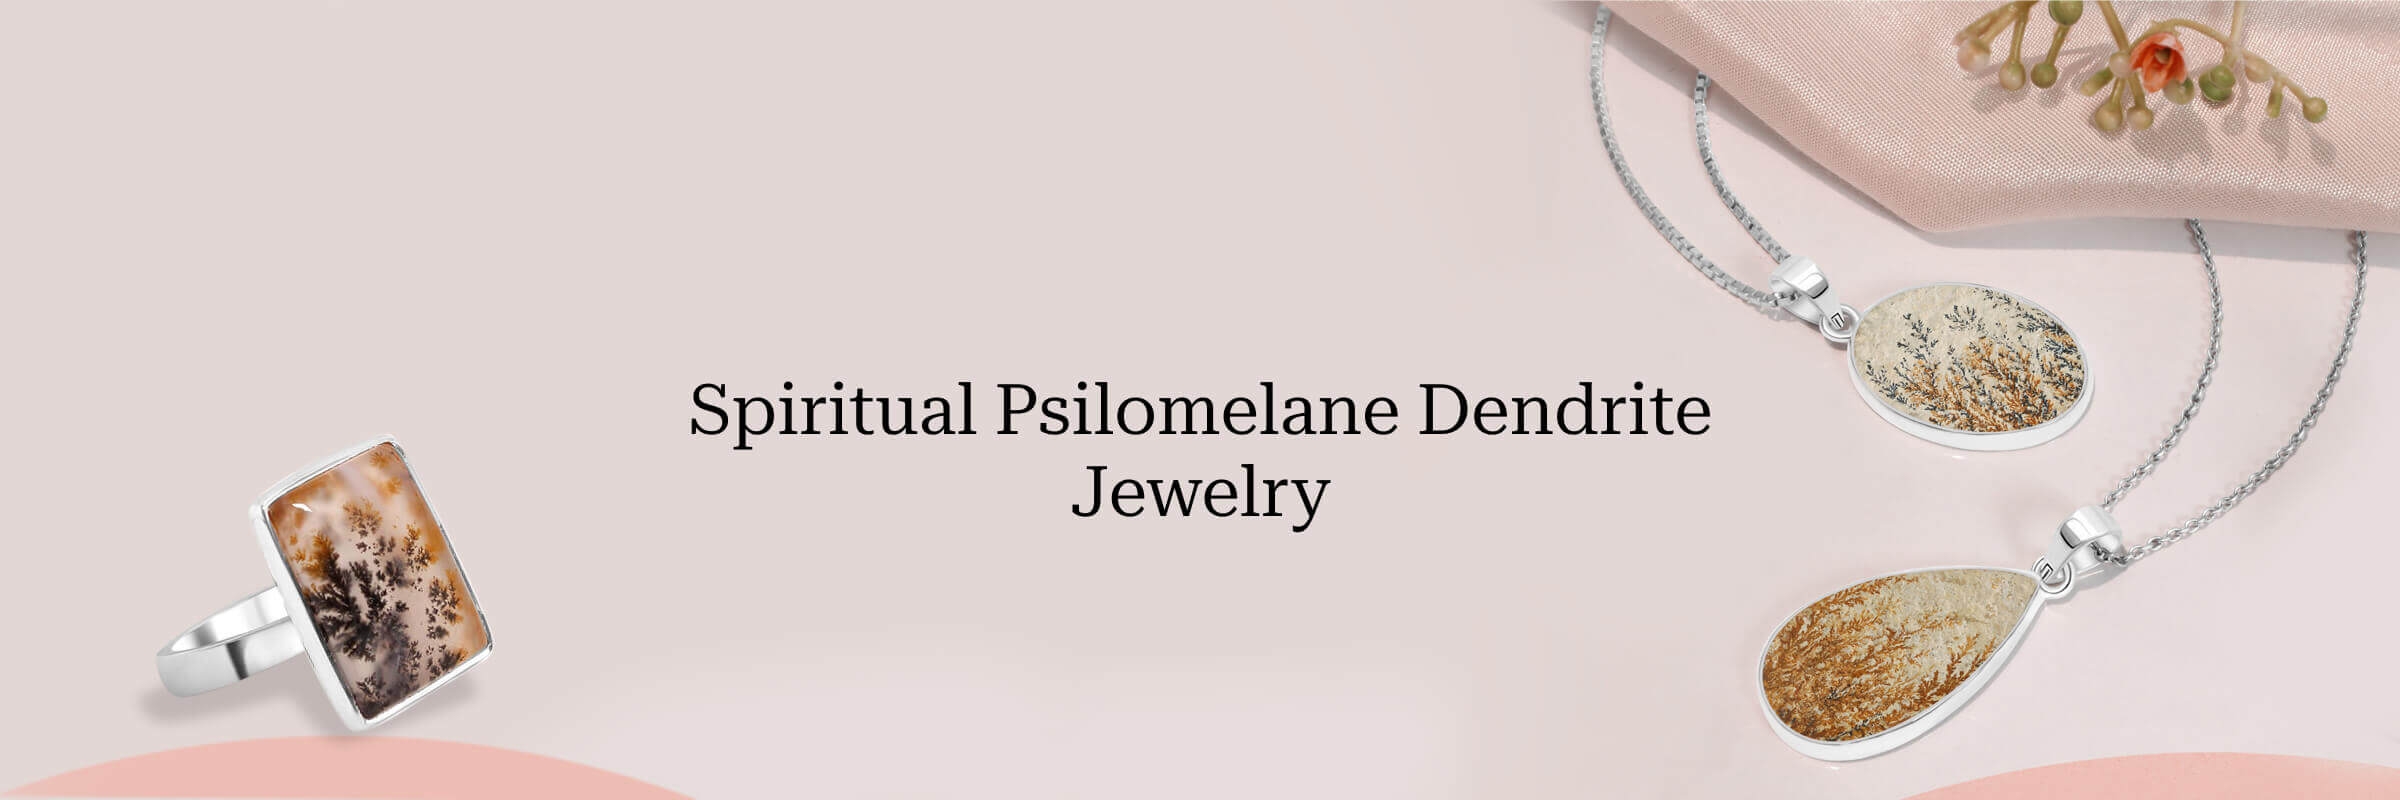 Psilomelane Dendrite Jewelry